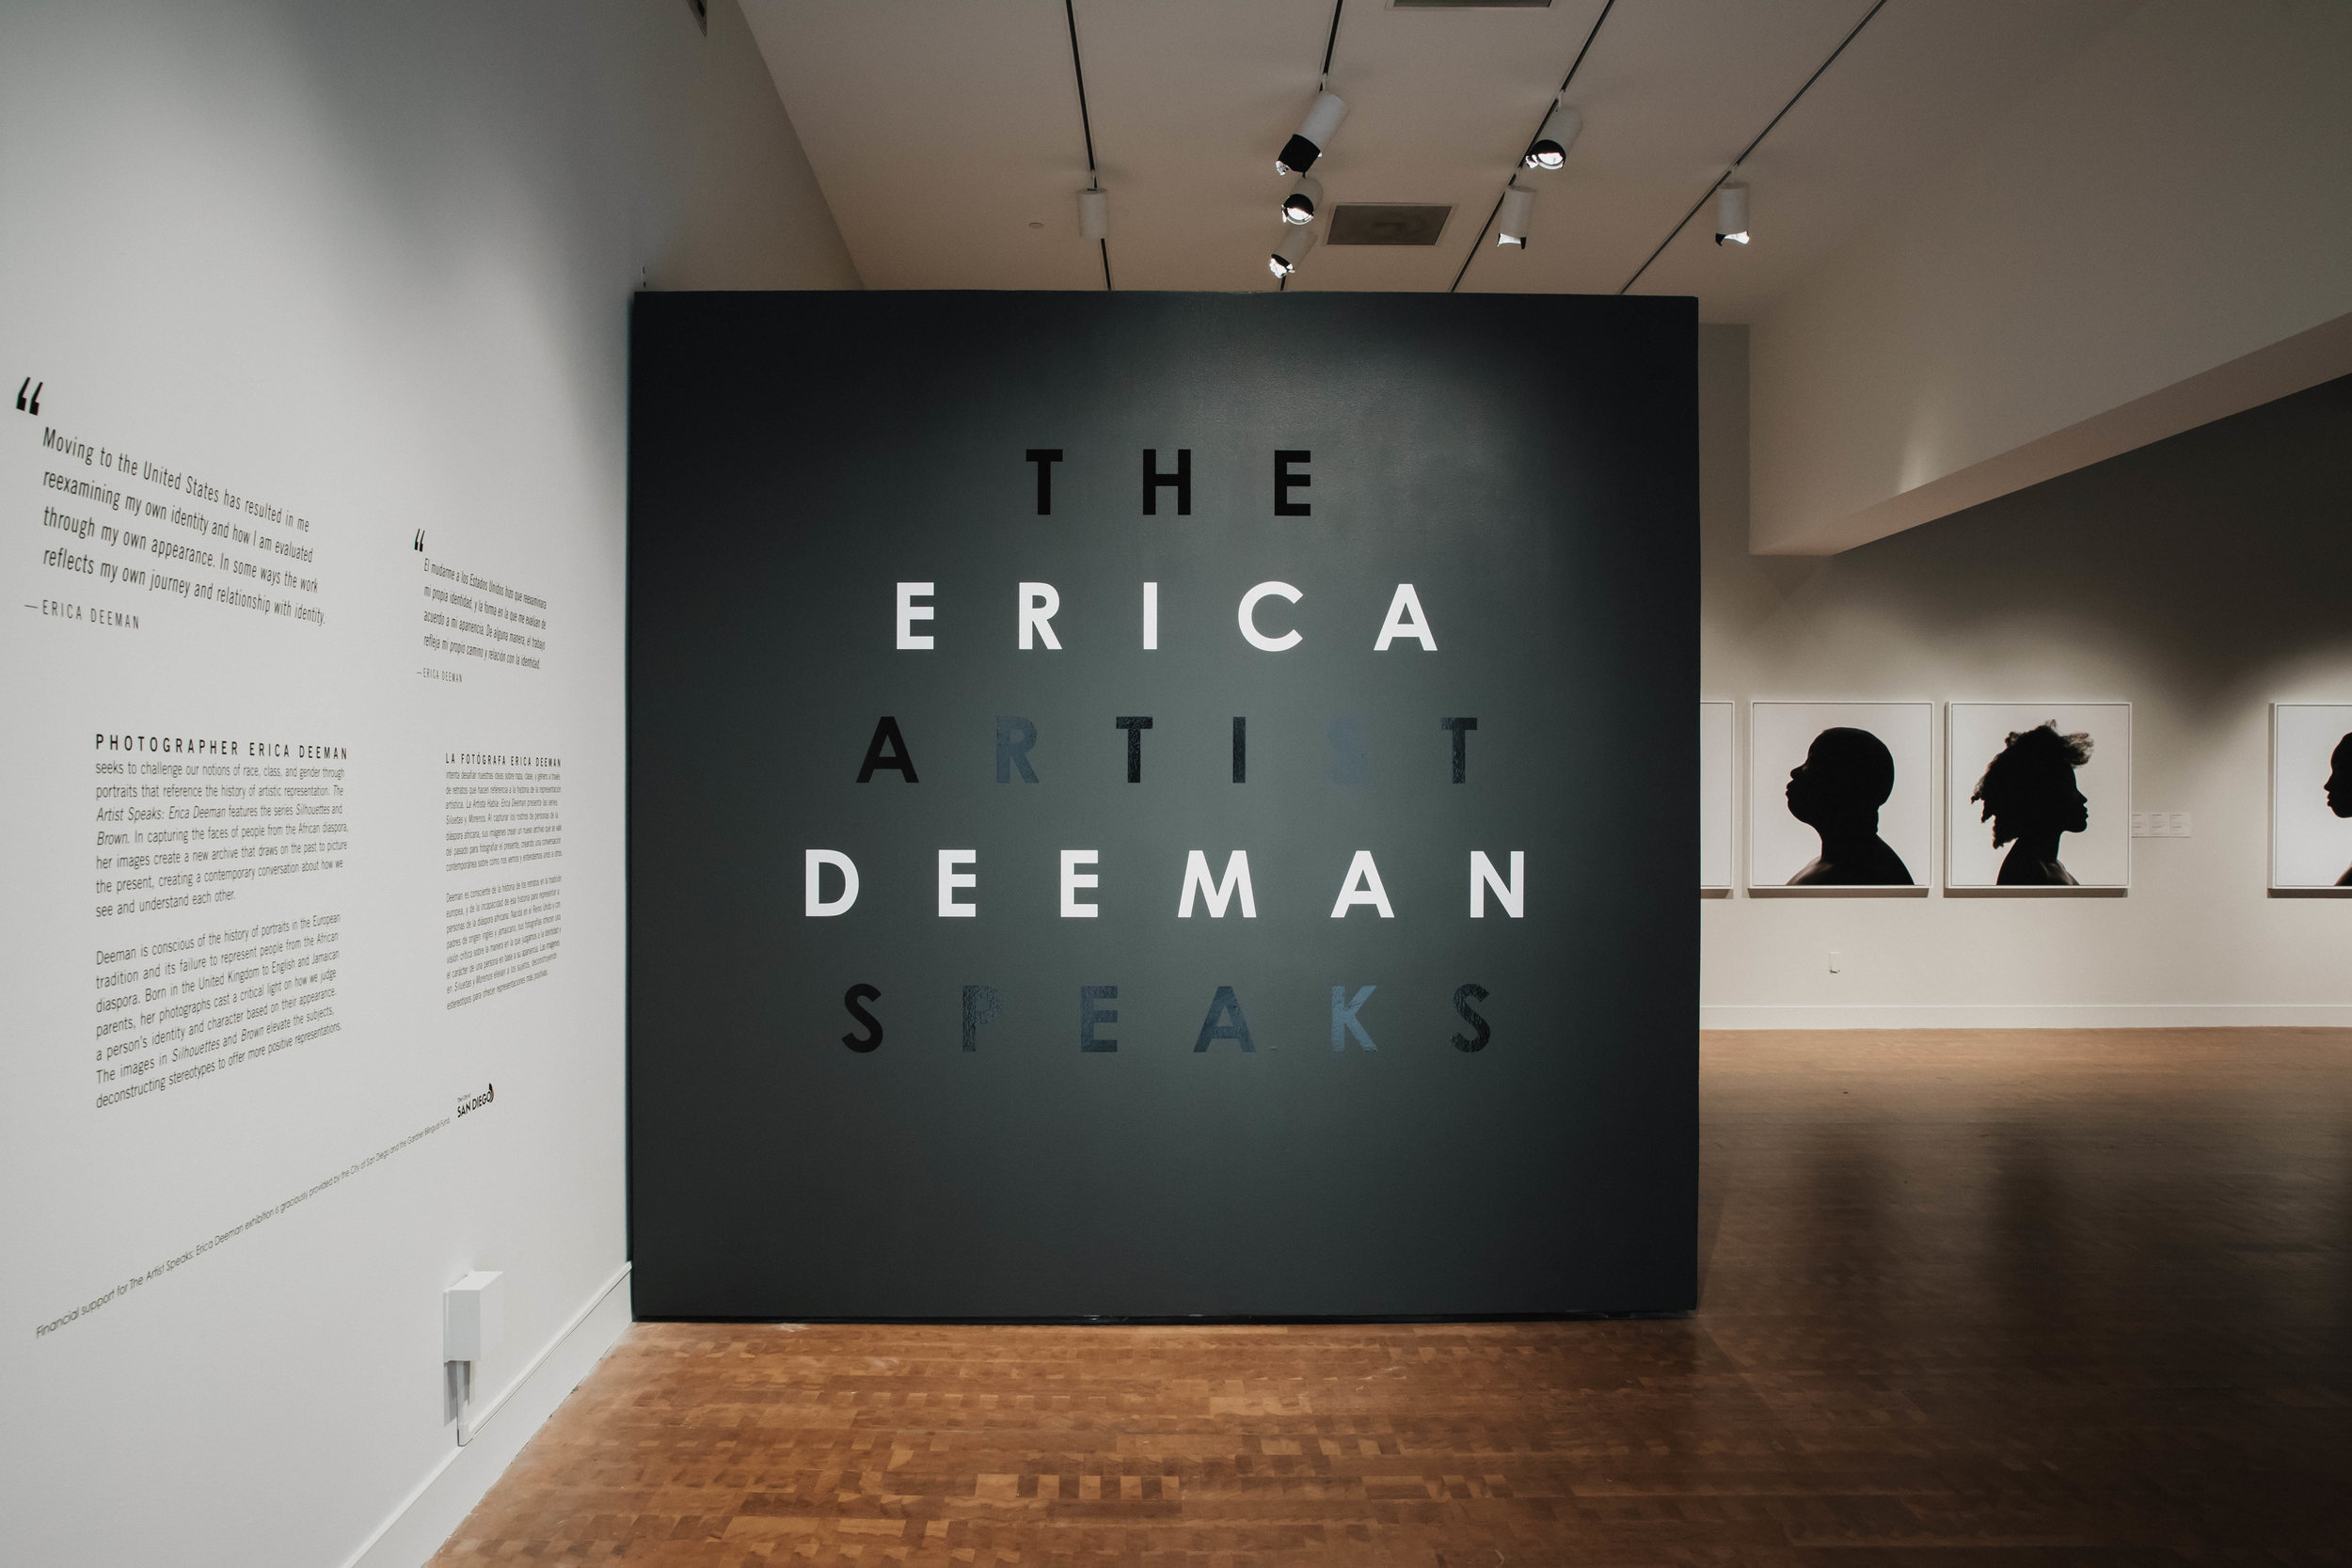   Erica Deeman: The Artist Talks   Museum of Photographic Arts, San Diego 21st April - 16th September 2018 